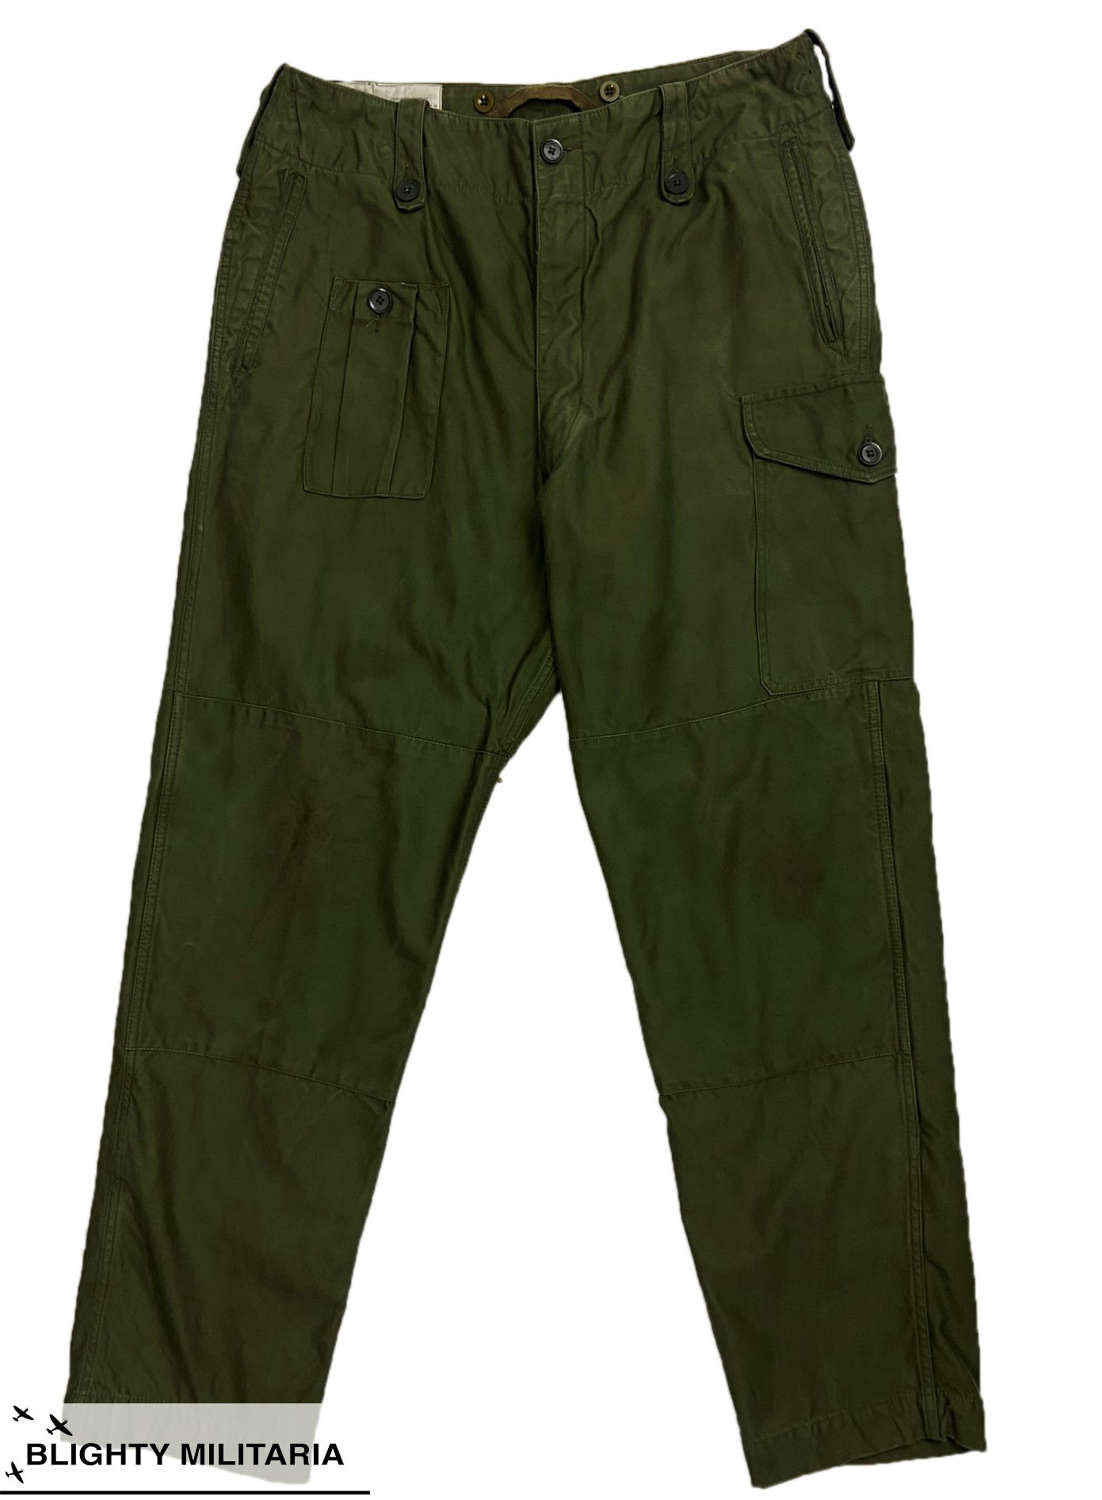 Original 1960 Pattern Combat Trousers - Size 6